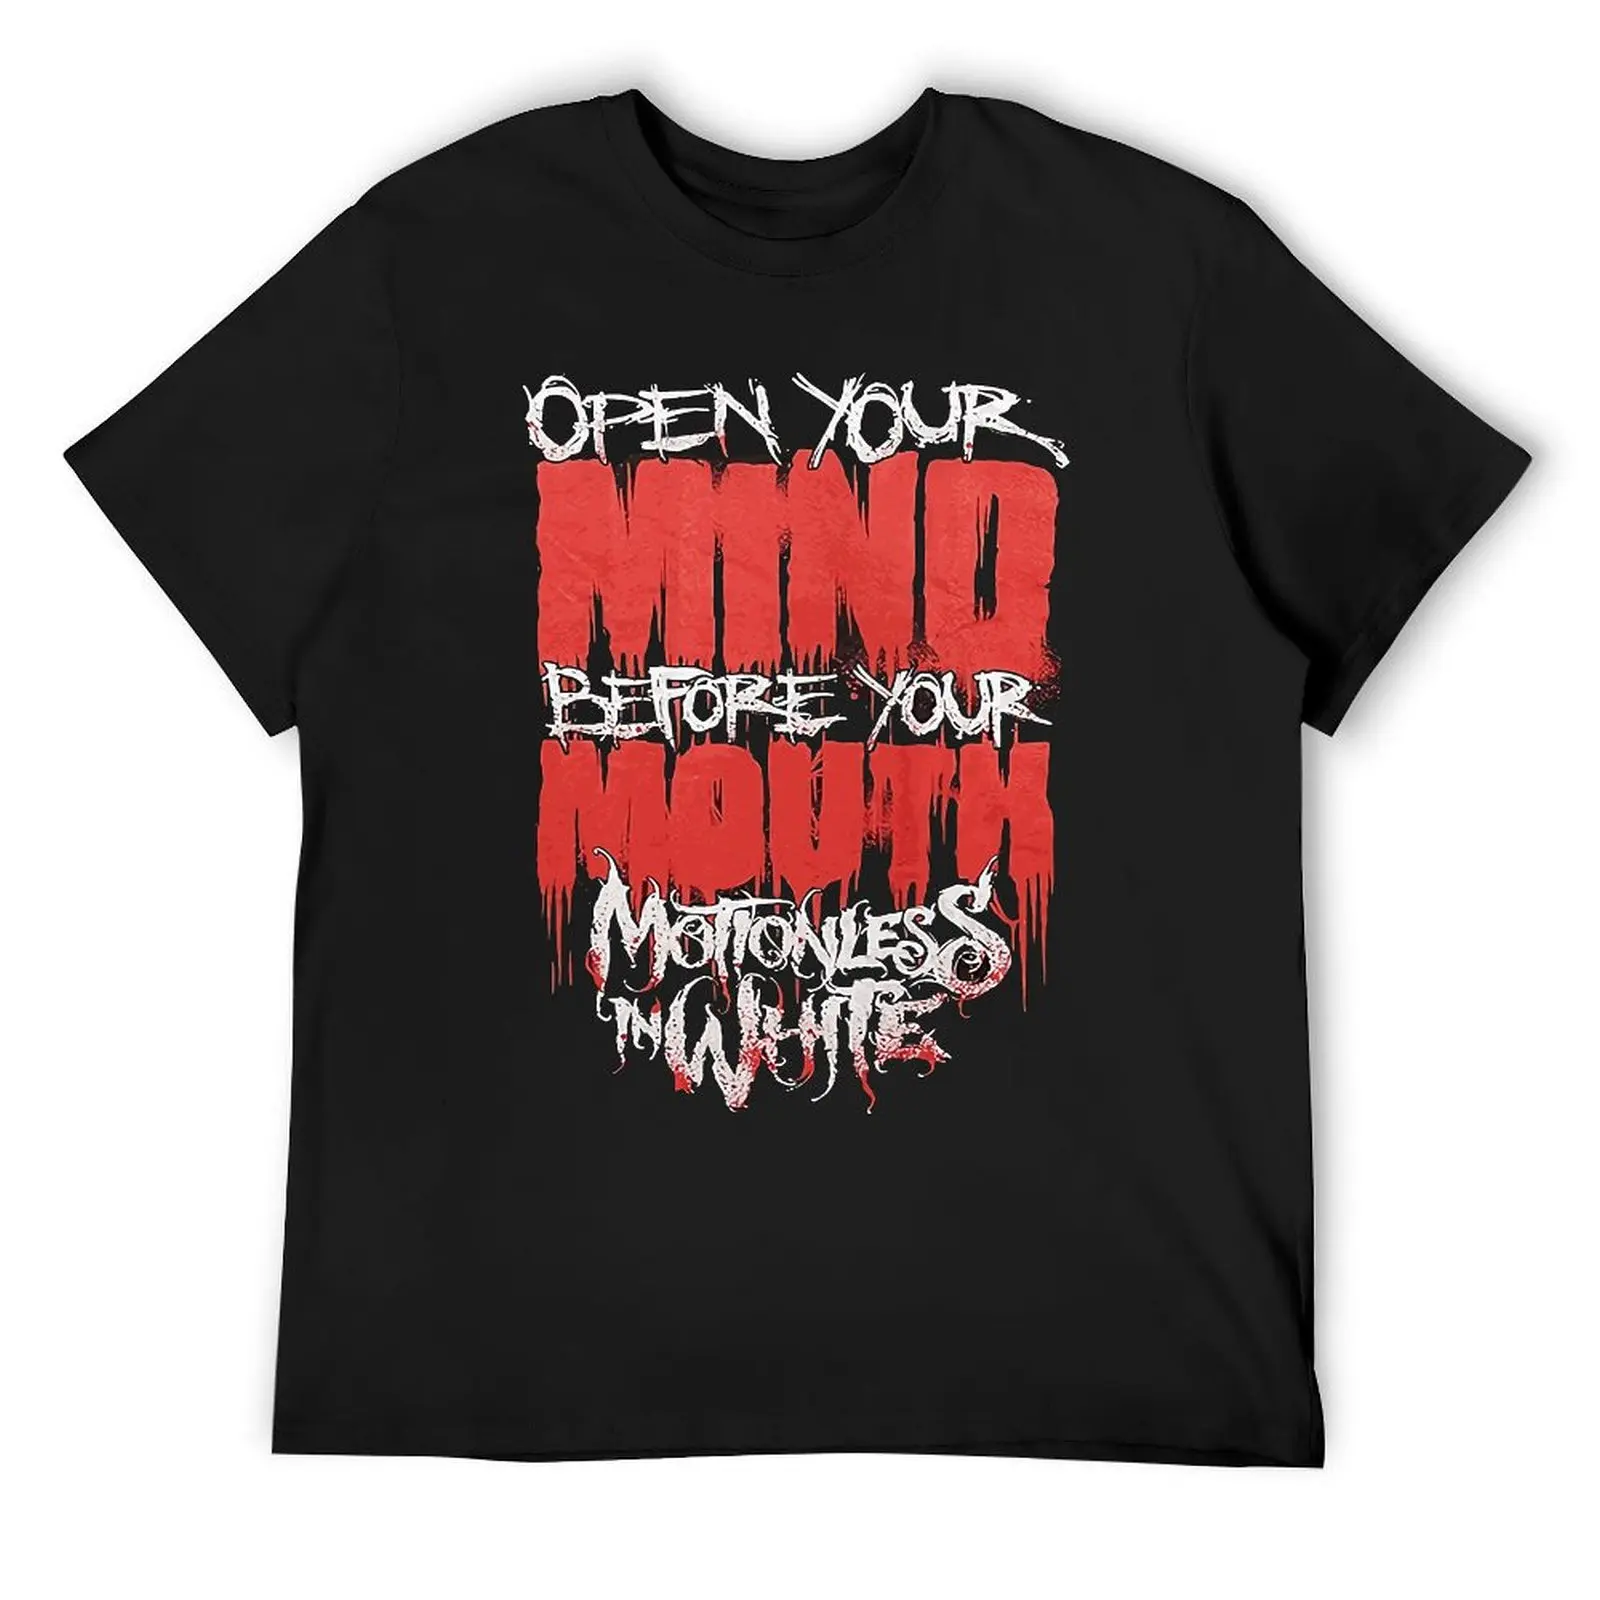 

Футболка с надписью «Open Your Mind before MOUTH», пара новинок, футболки премиум-класса на заказ, футболка с короткими рукавами, потрясающая одежда оверсайз Gi